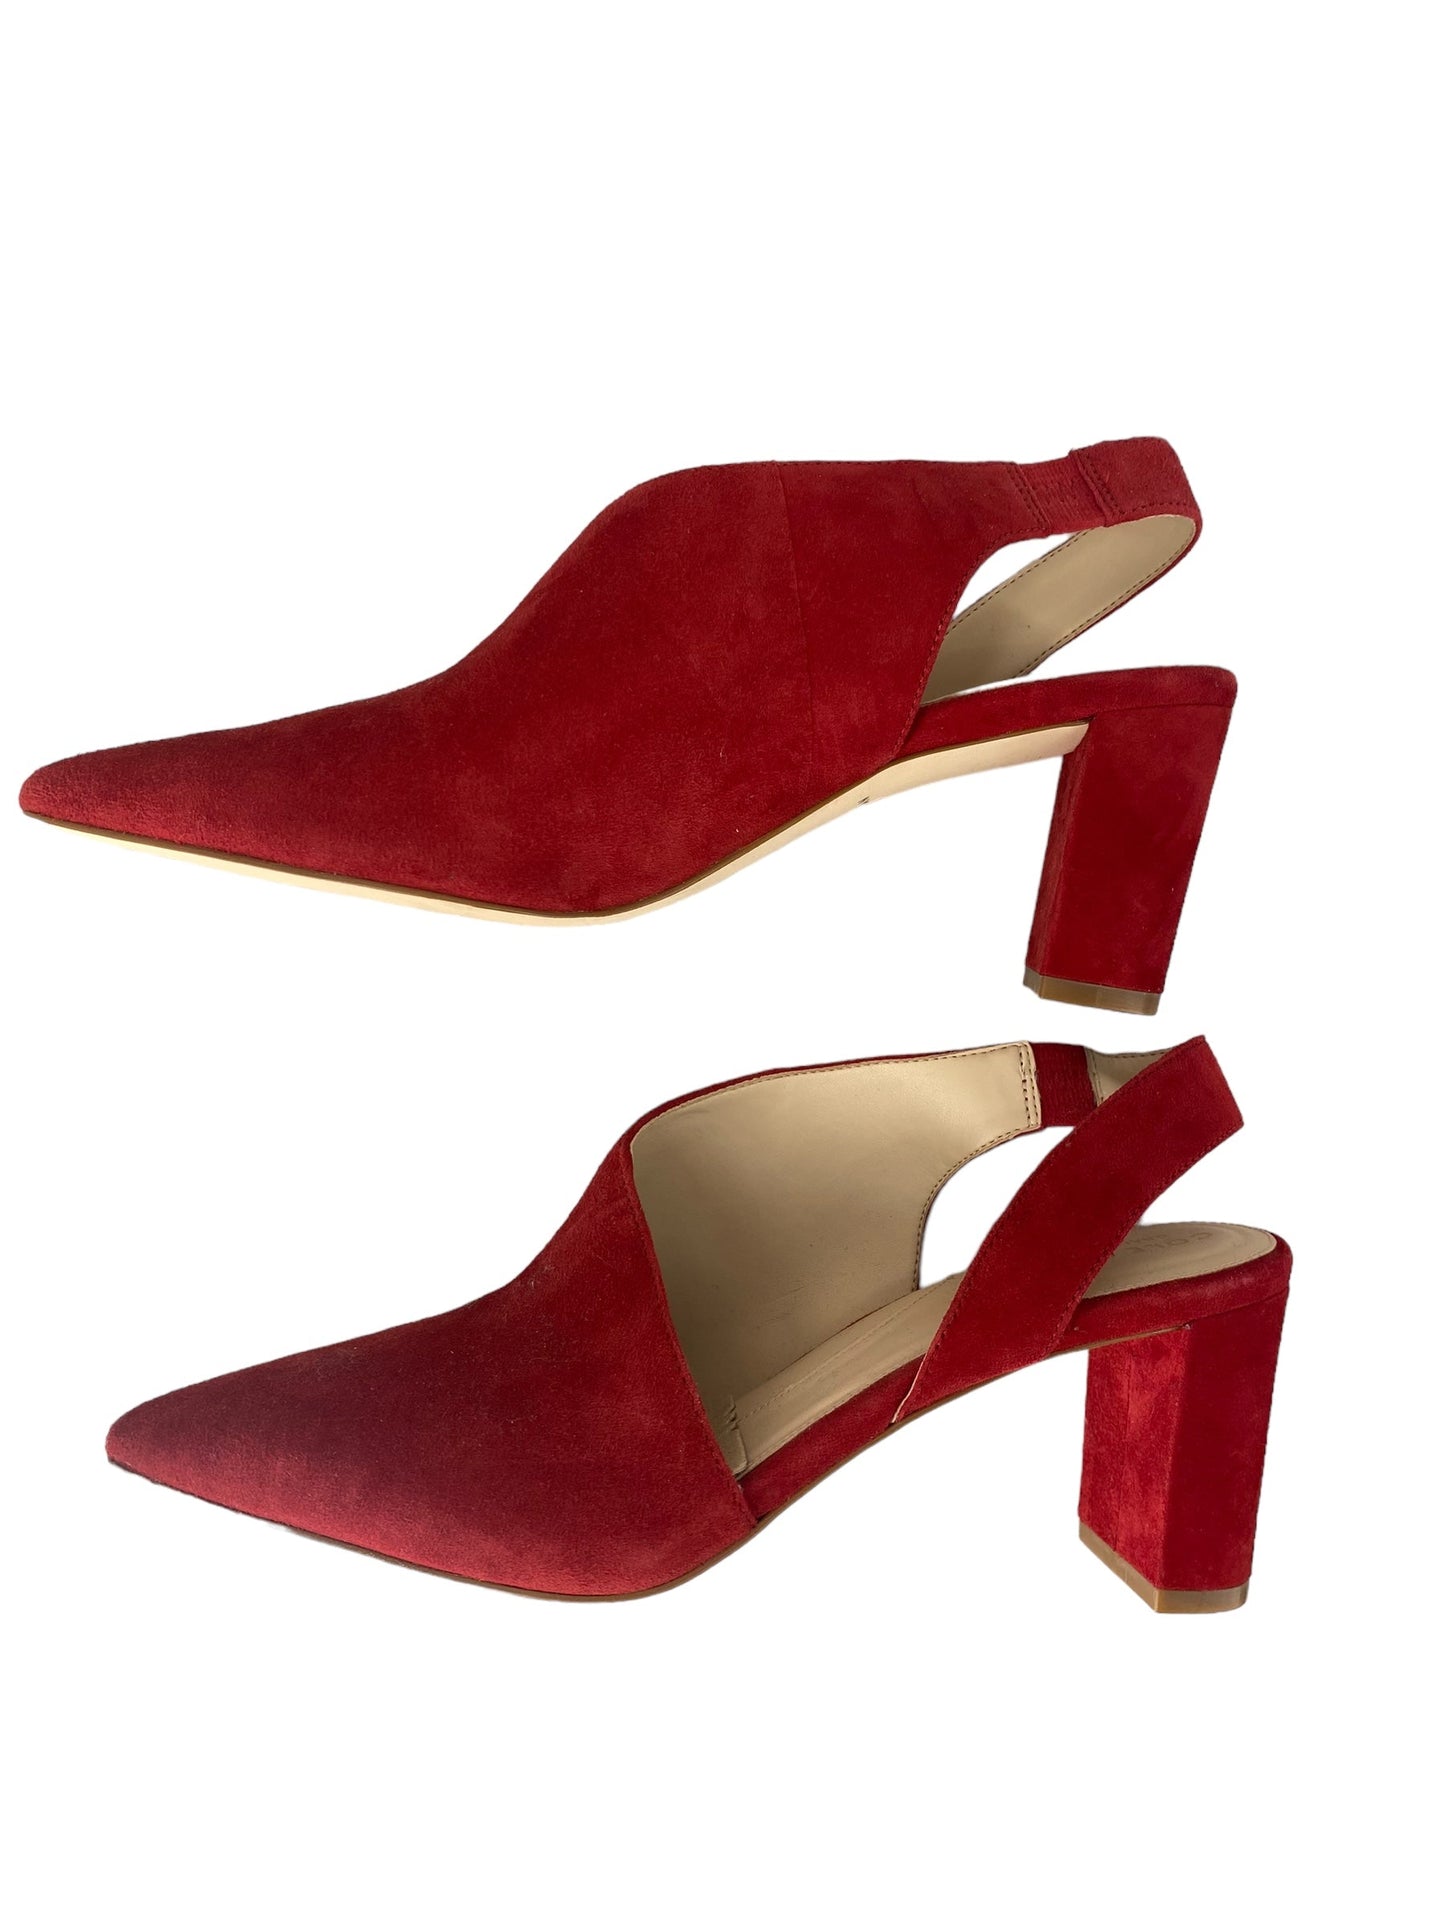 Red Shoes Heels Block Cole-haan, Size 8.5